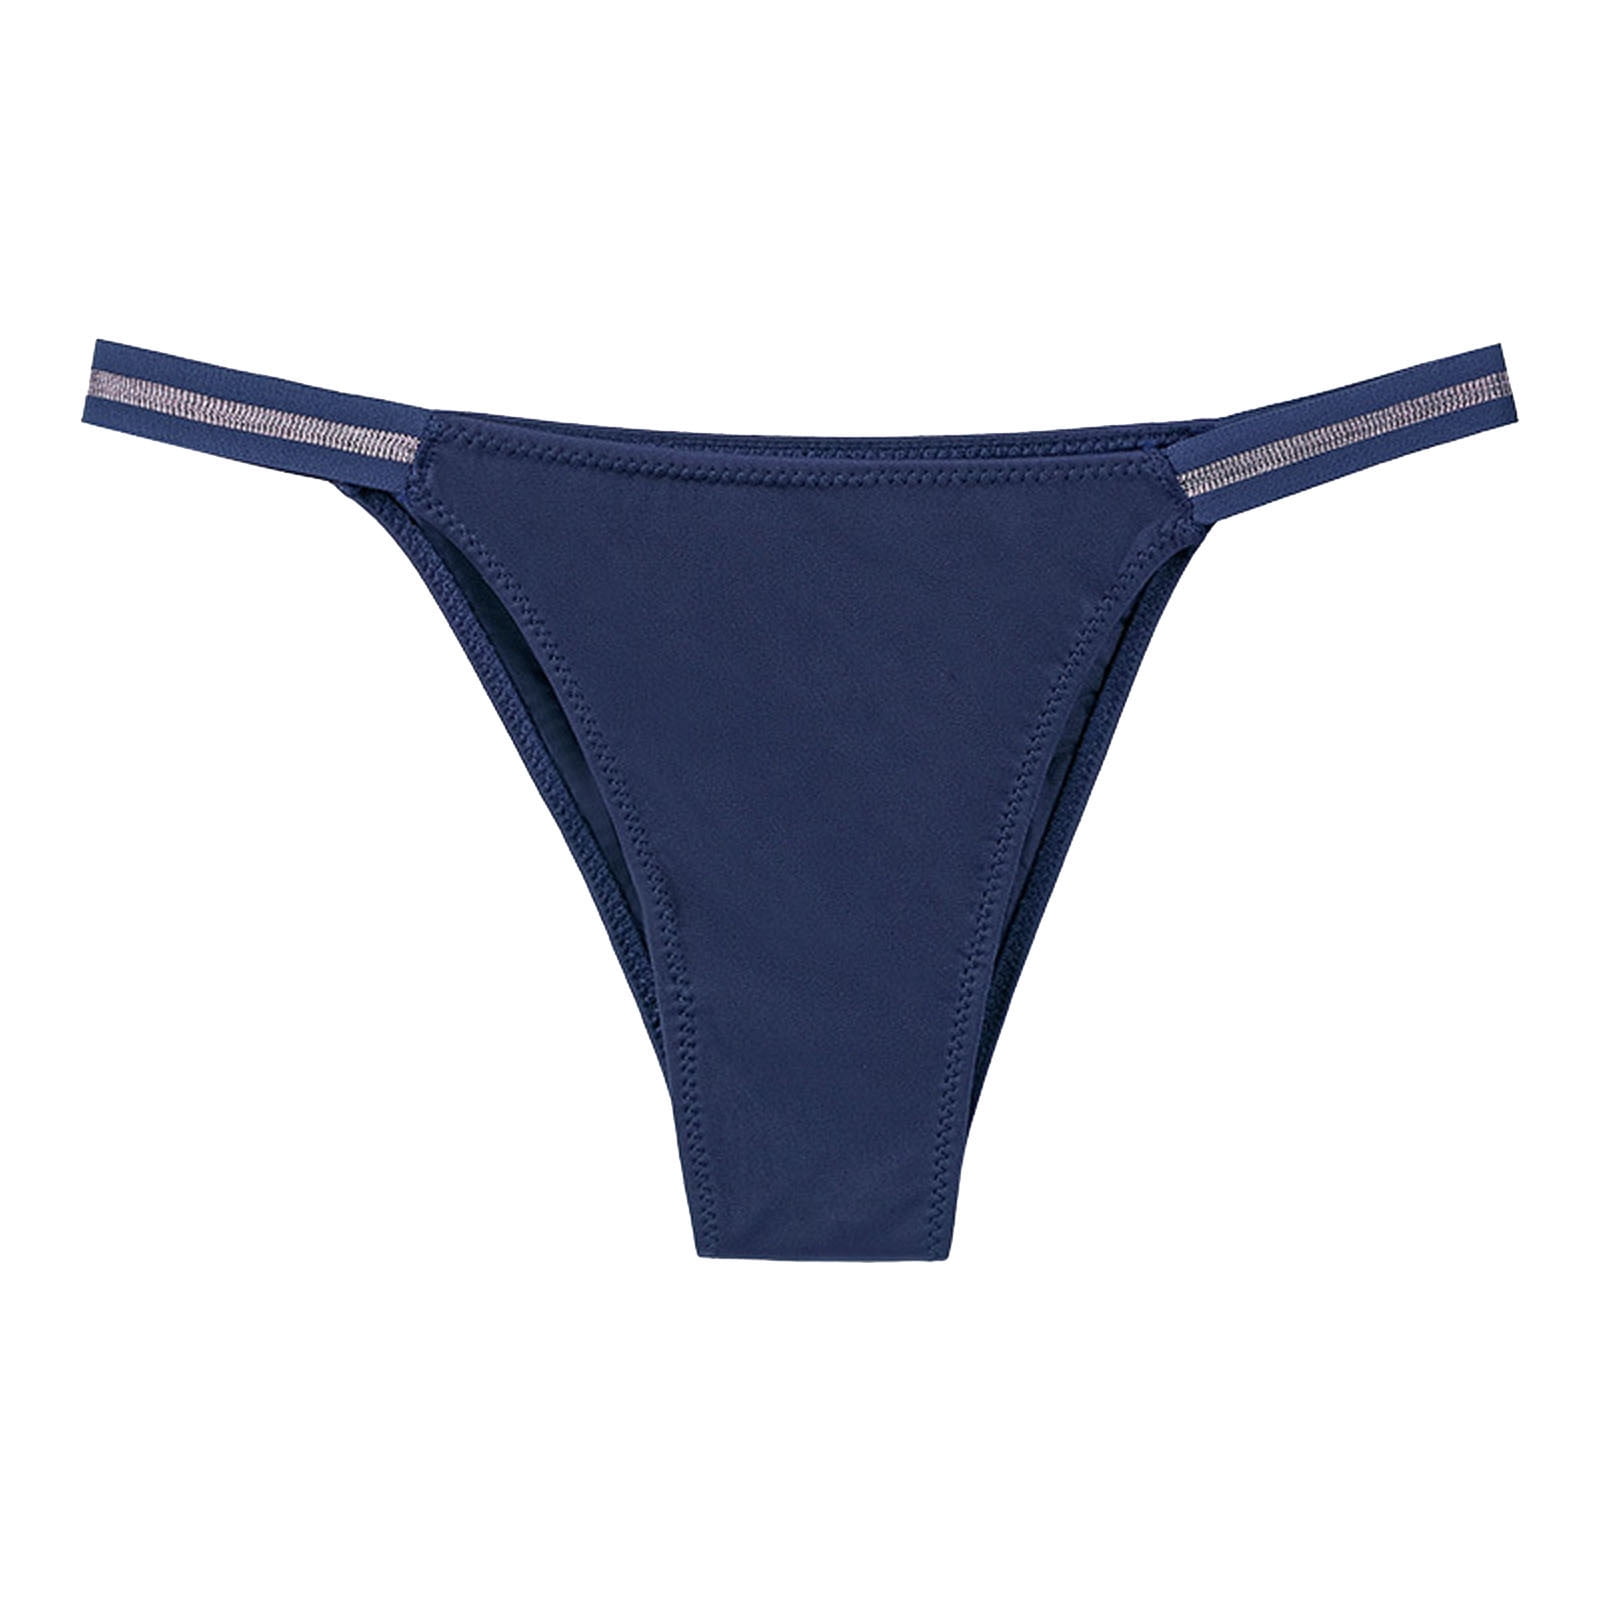 Kcocoo Womens Solid Underwear V String Thong Panty Lingerie Black